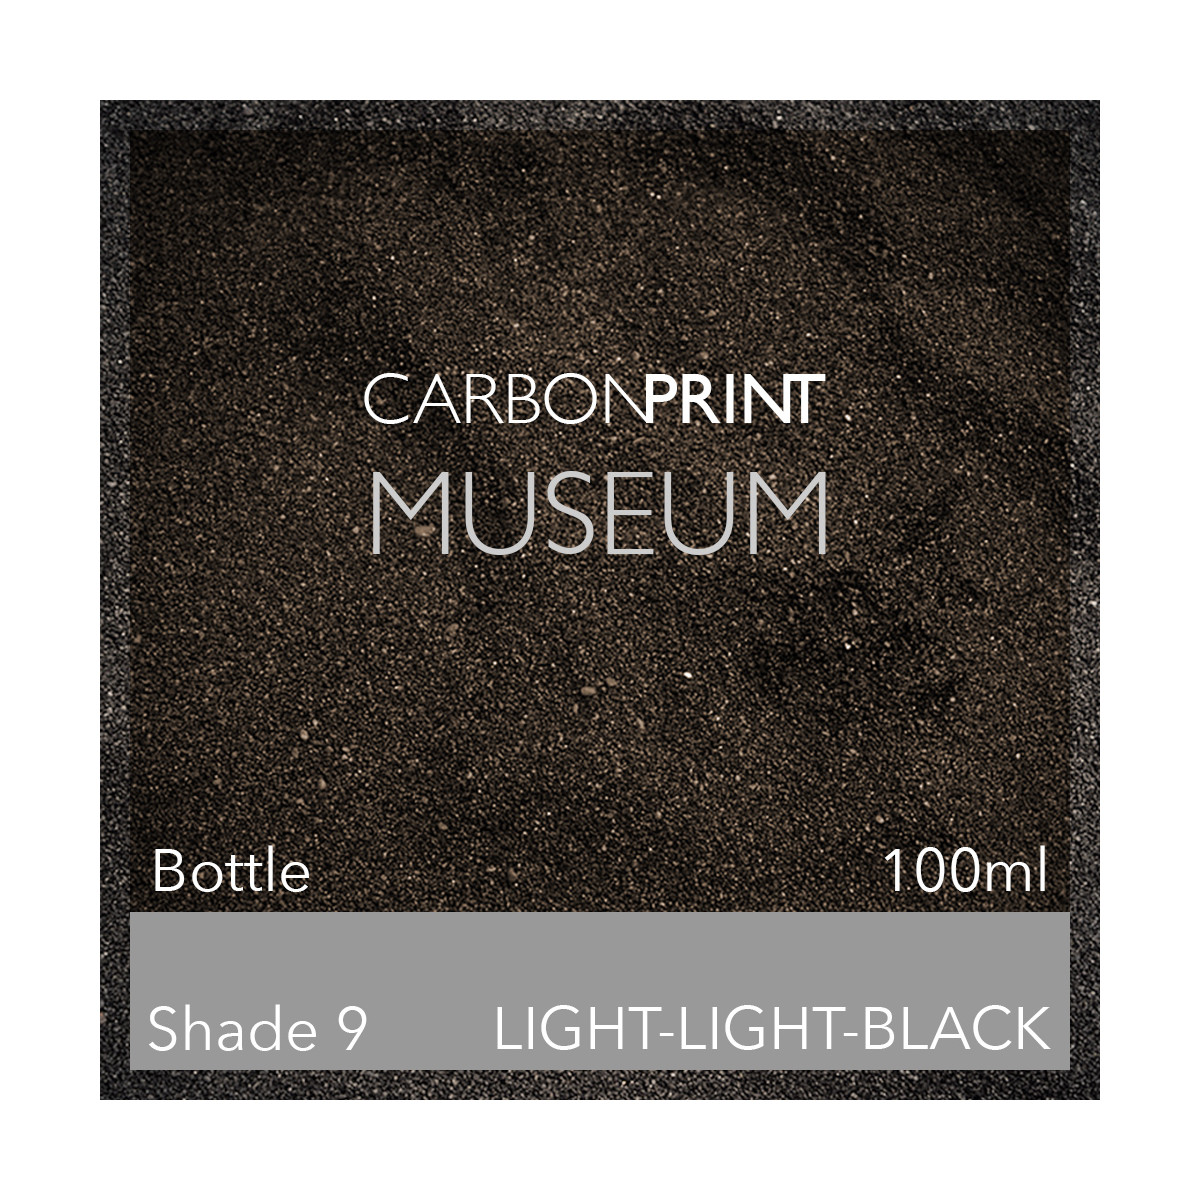 Carbonprint Museum Shade9 Channel LLK / LGY 100ml